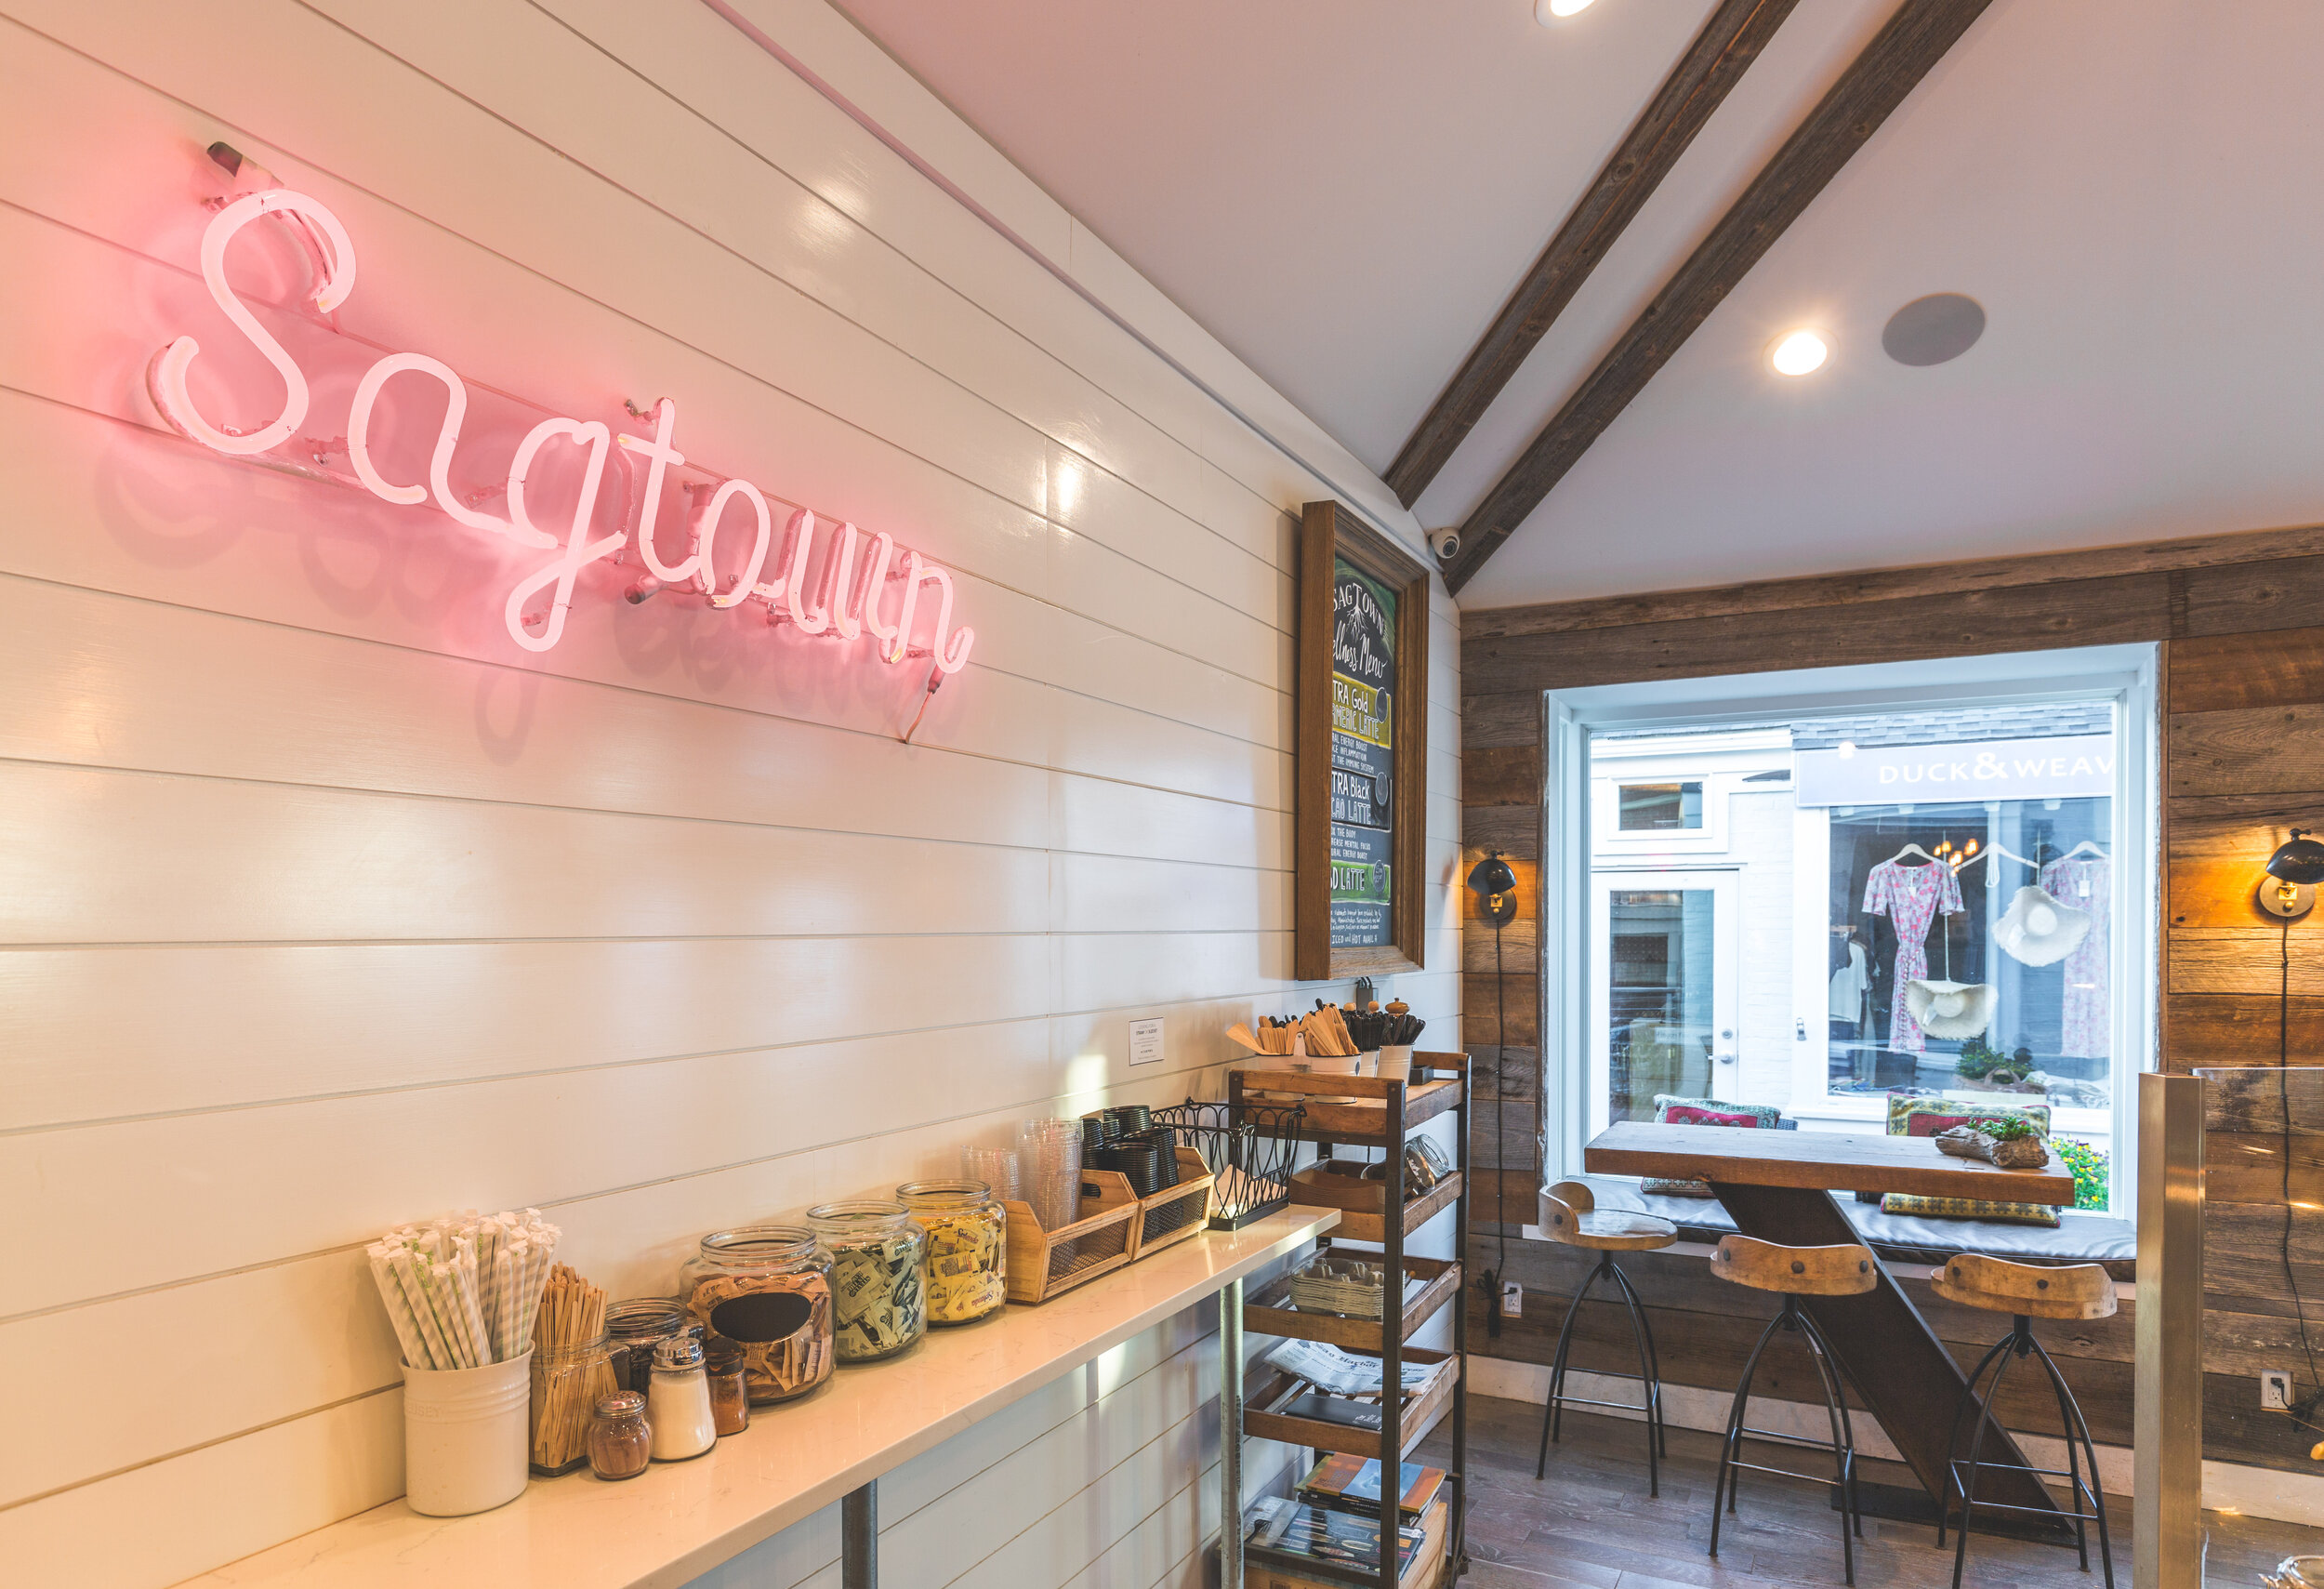 Sagtown Coffee Shop